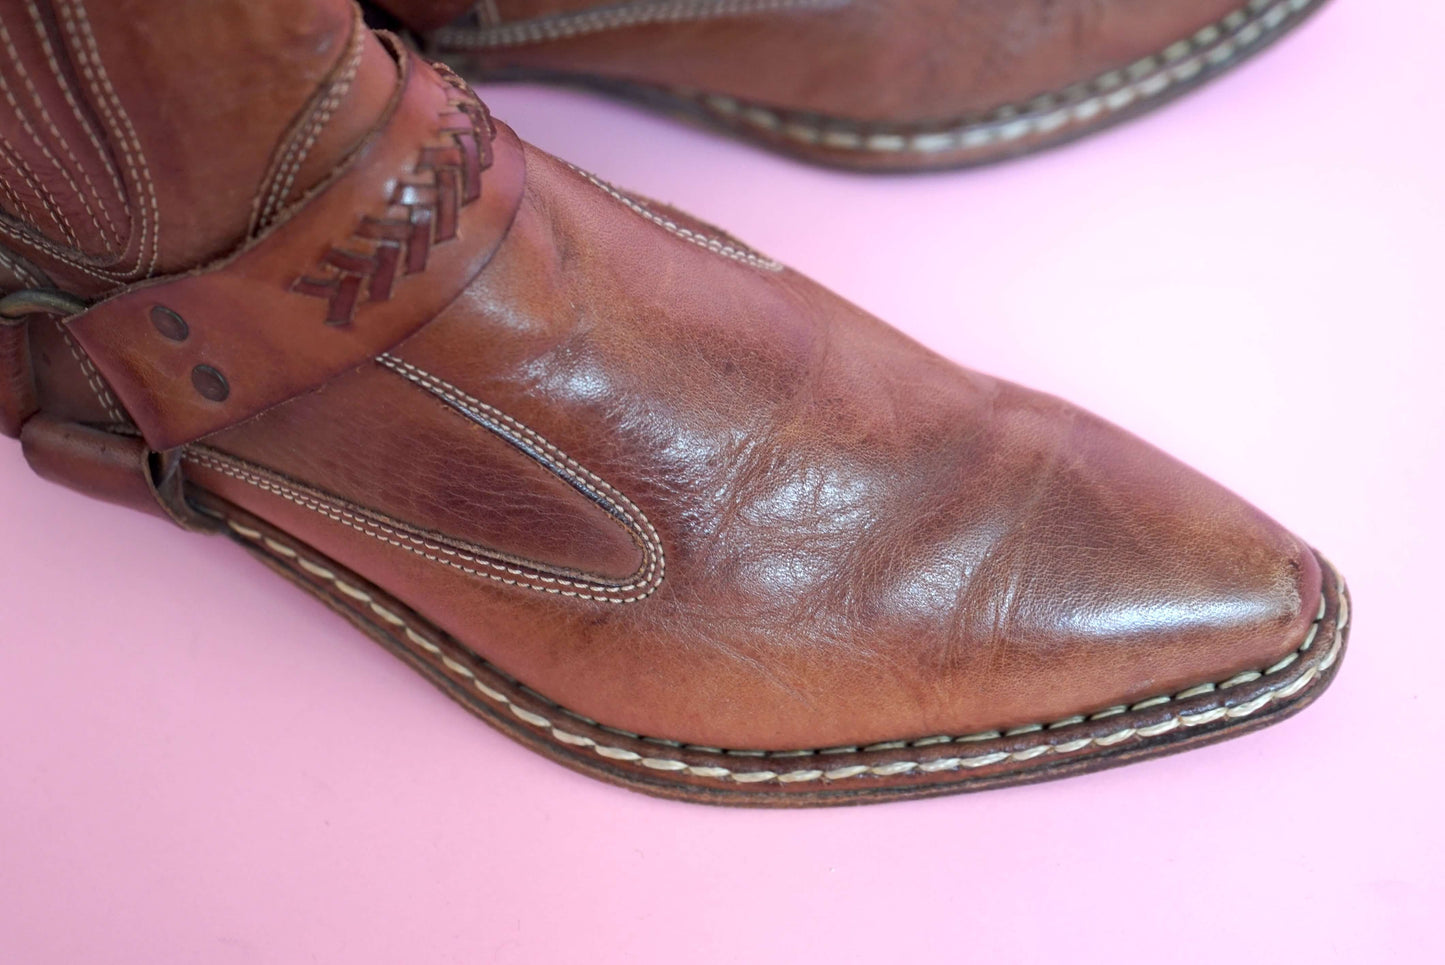 Vintage Brown Leather Cowboy Ankle Boots UK Size 4.5-5/ EU 37.5-38